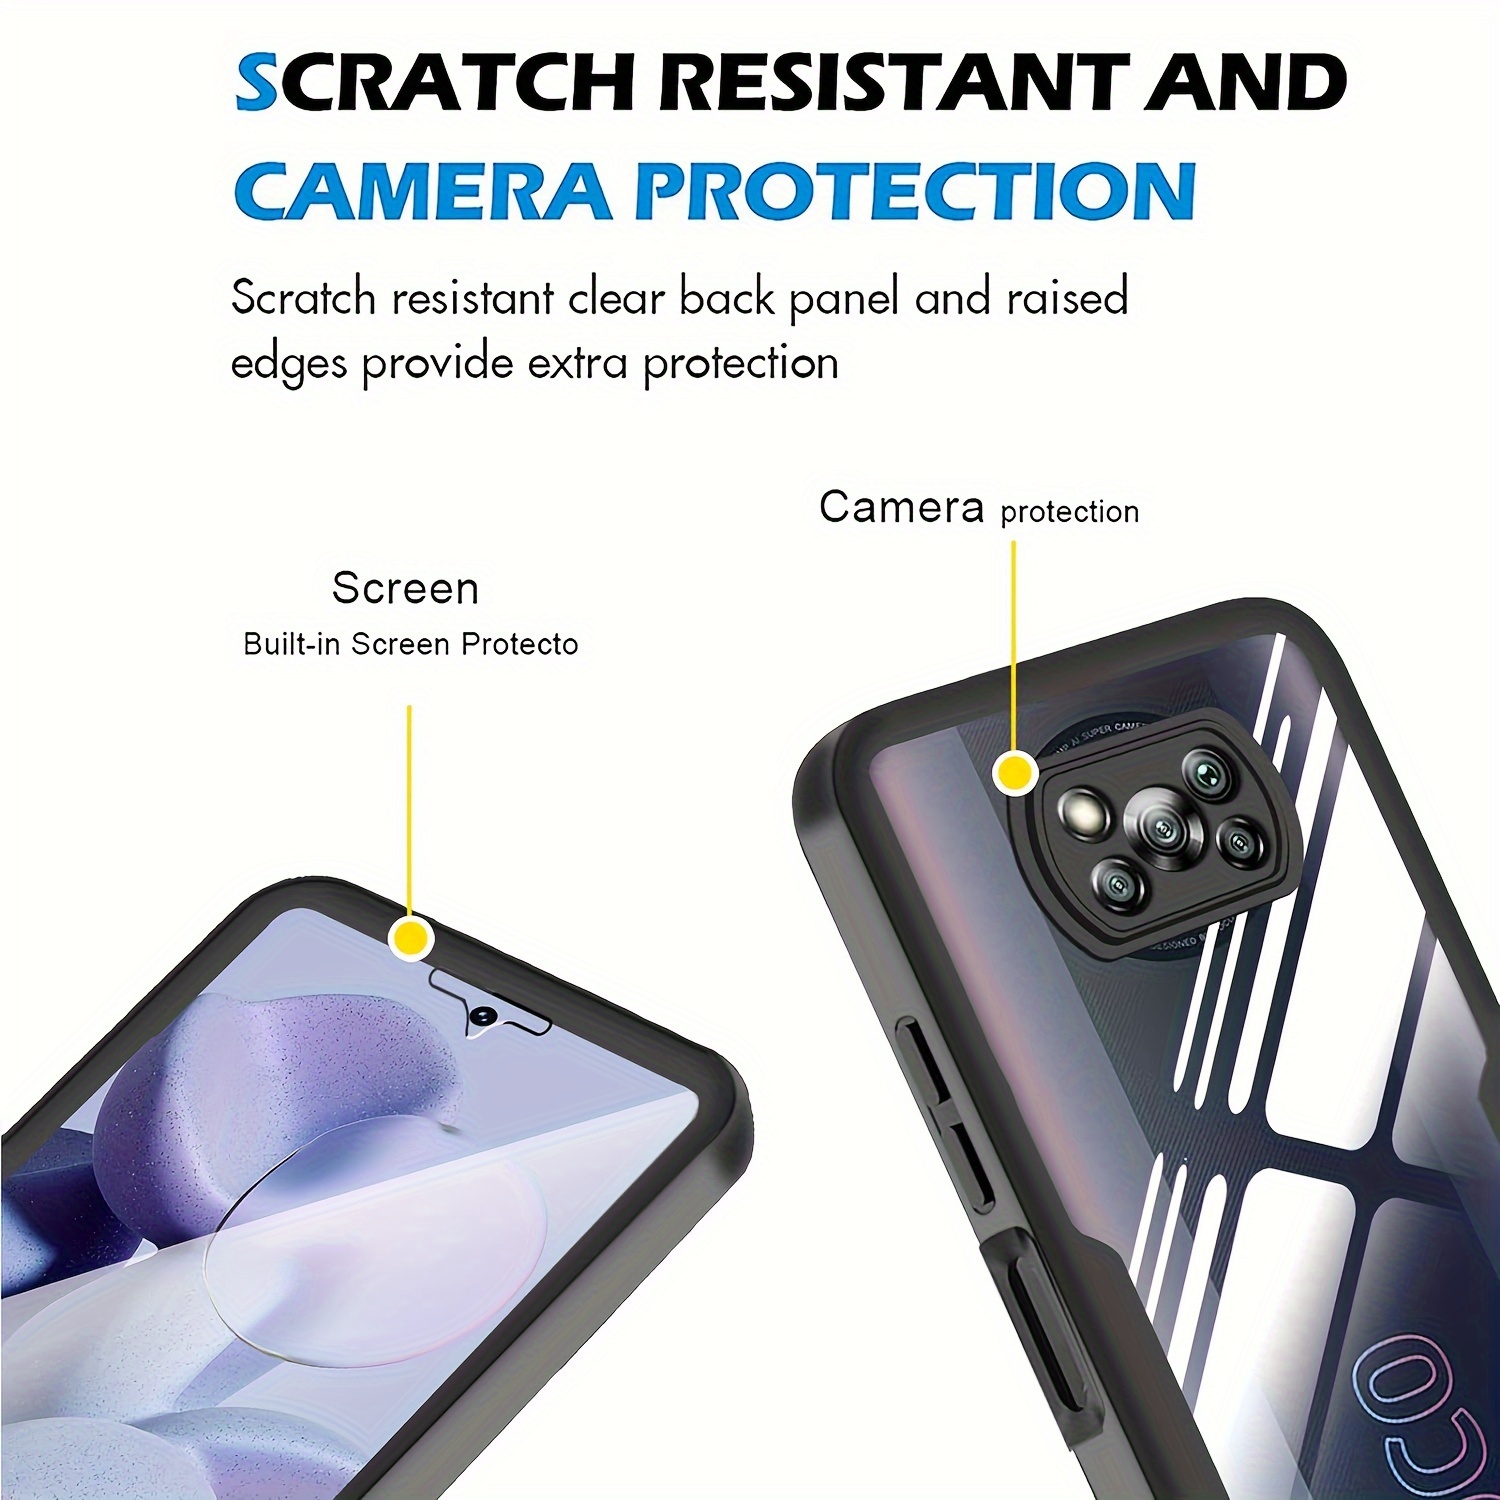 Clear case Transparent Shockproof Phone Case For Xiaomi Redmi 13C